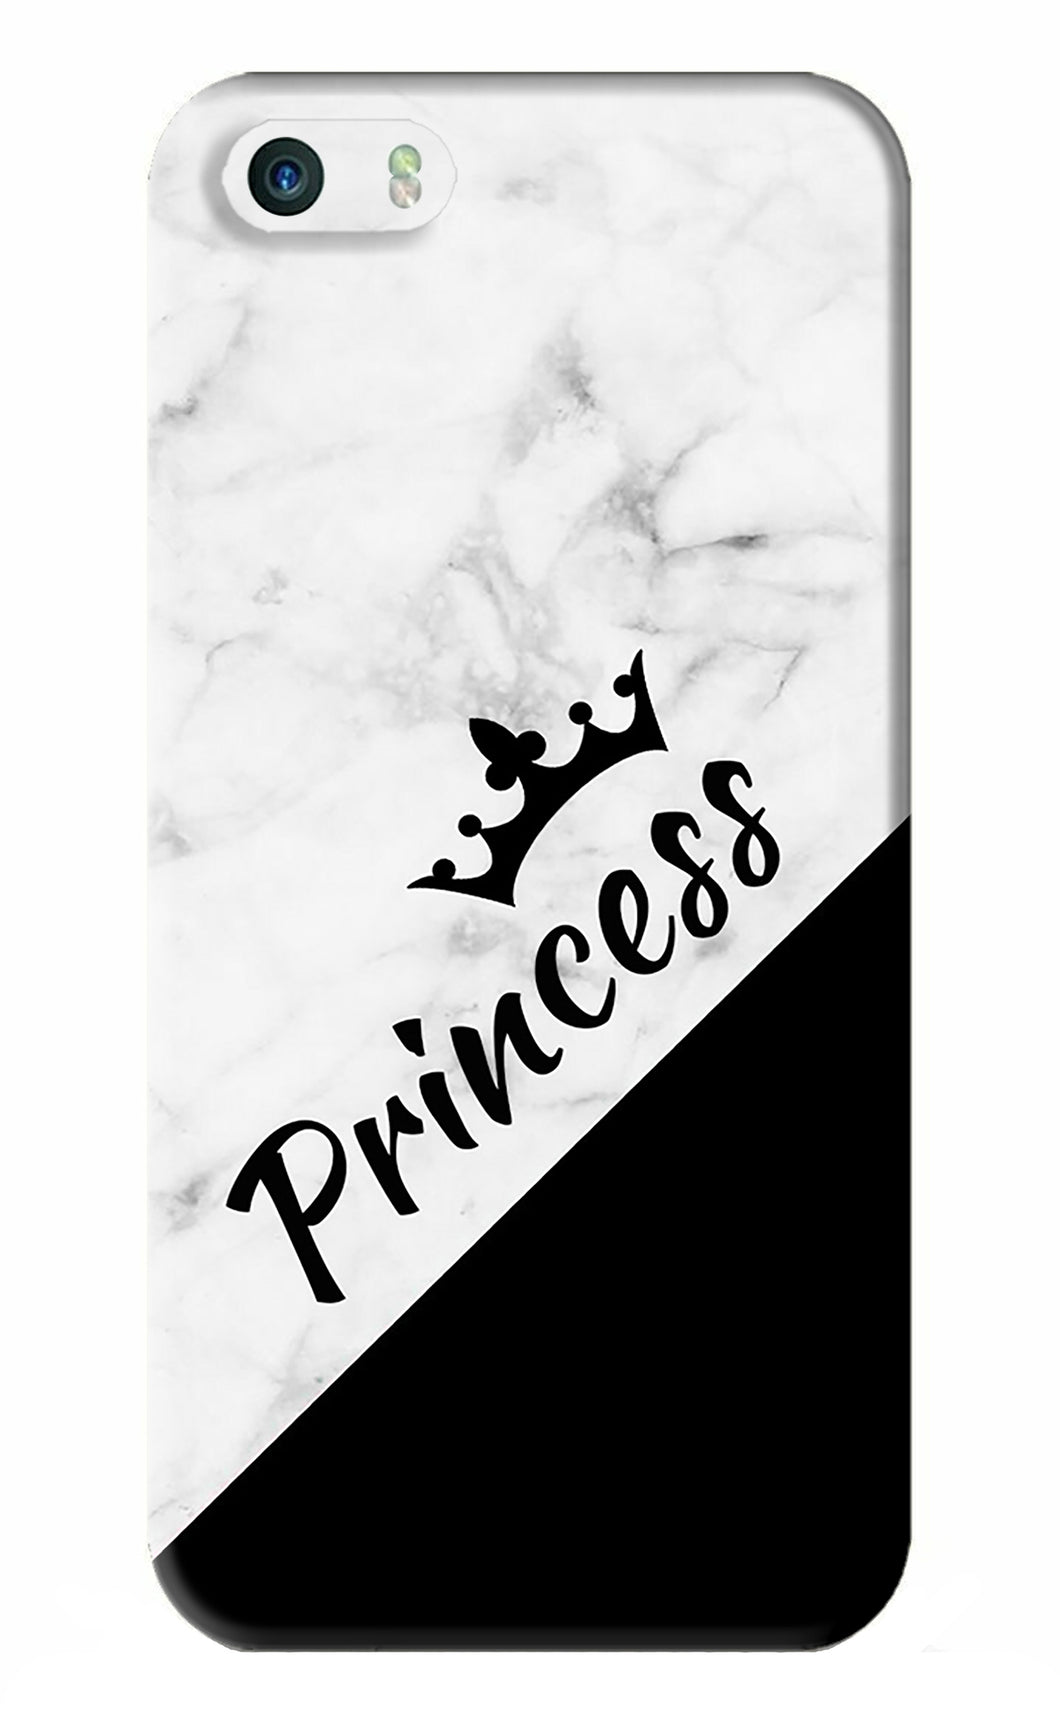 Princess iPhone 5S Back Skin Wrap